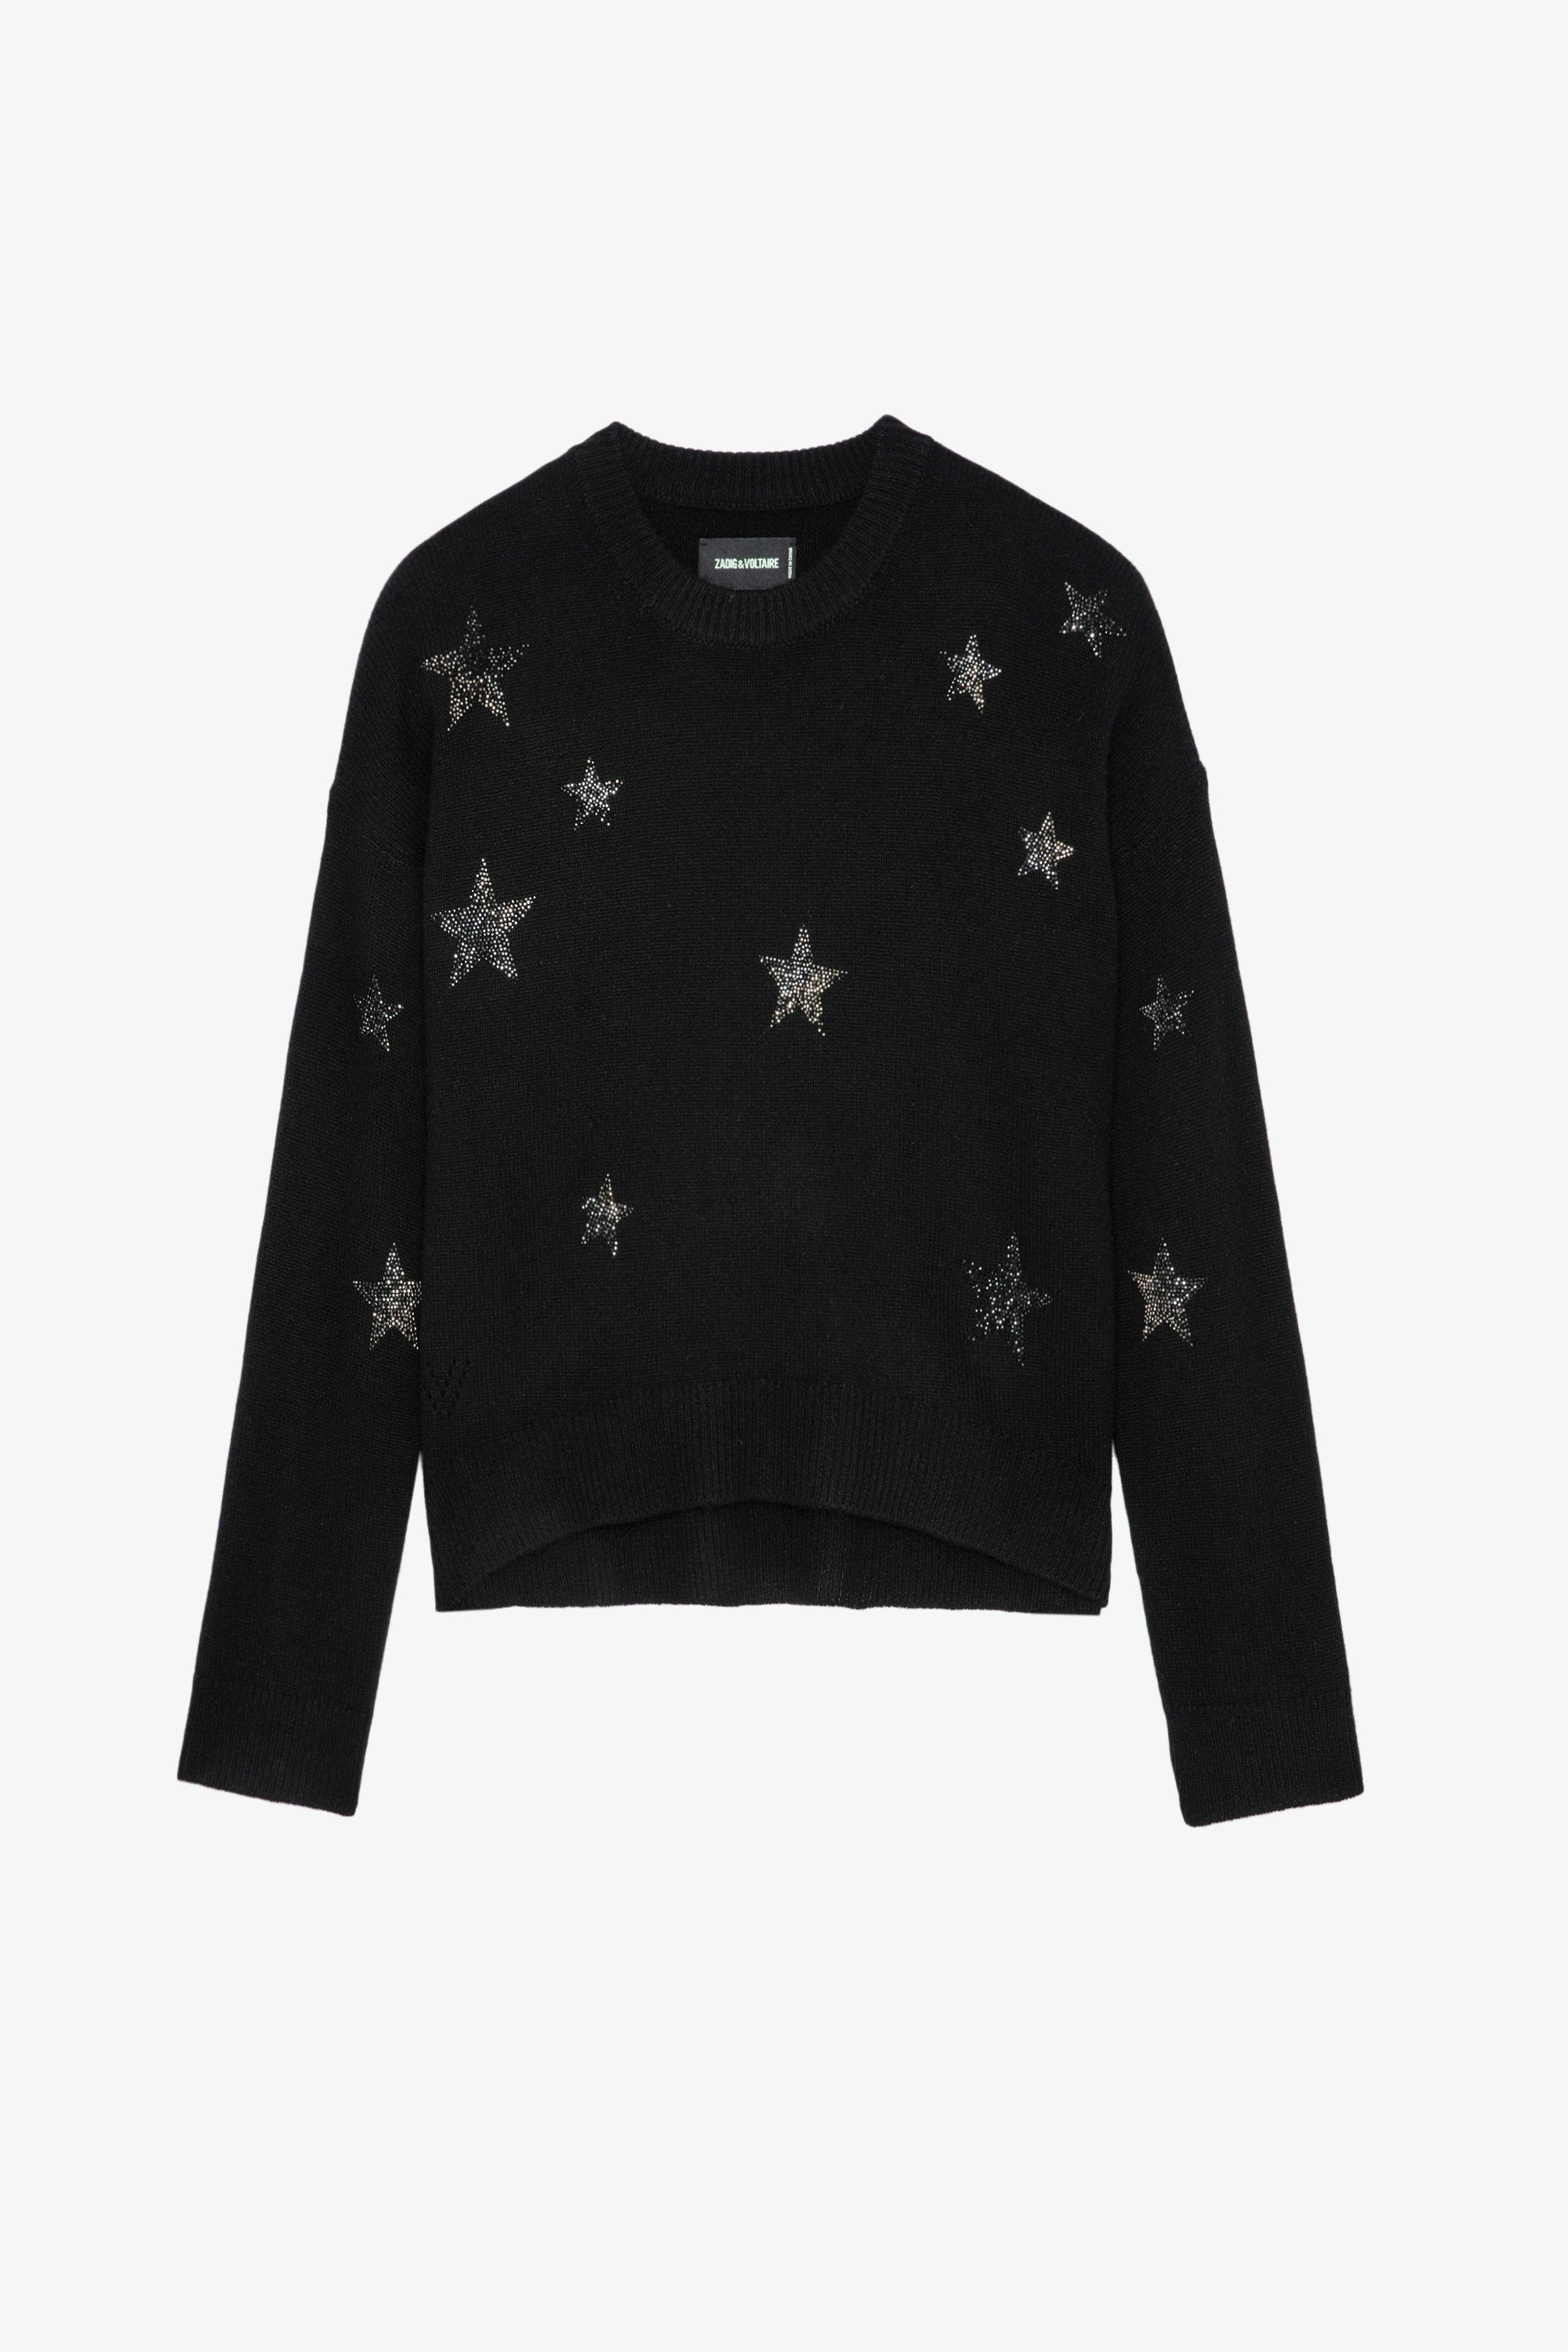 Markus Stars カシミヤ ニット Women’s black rhinestone cashmere jumper with star motifs